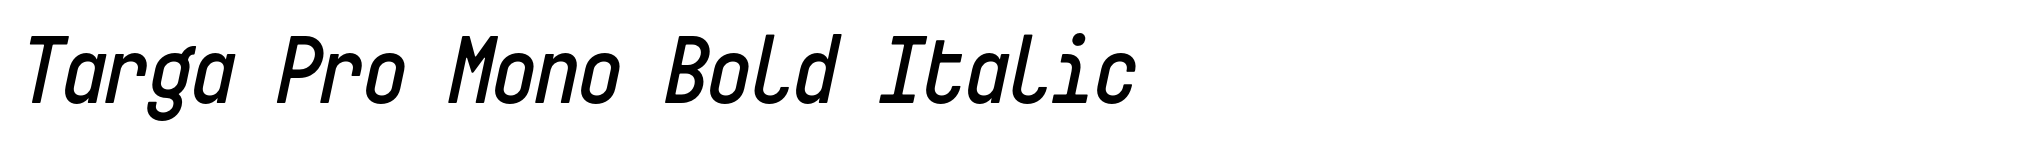 Targa Pro Mono Bold Italic image